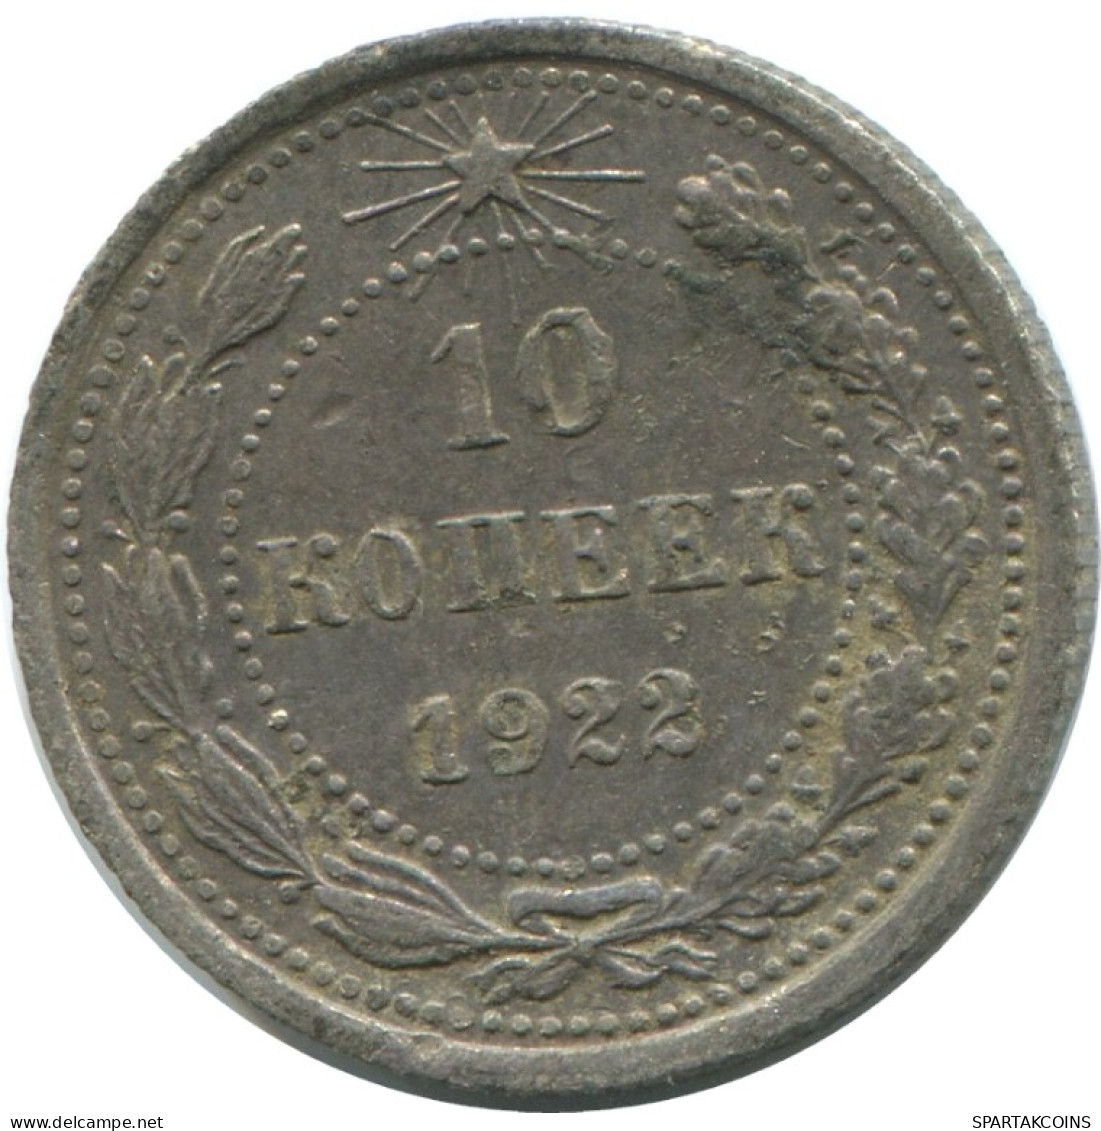 10 KOPEKS 1923 RUSSIA RSFSR SILVER Coin HIGH GRADE #AE878.4.U.A - Rusland